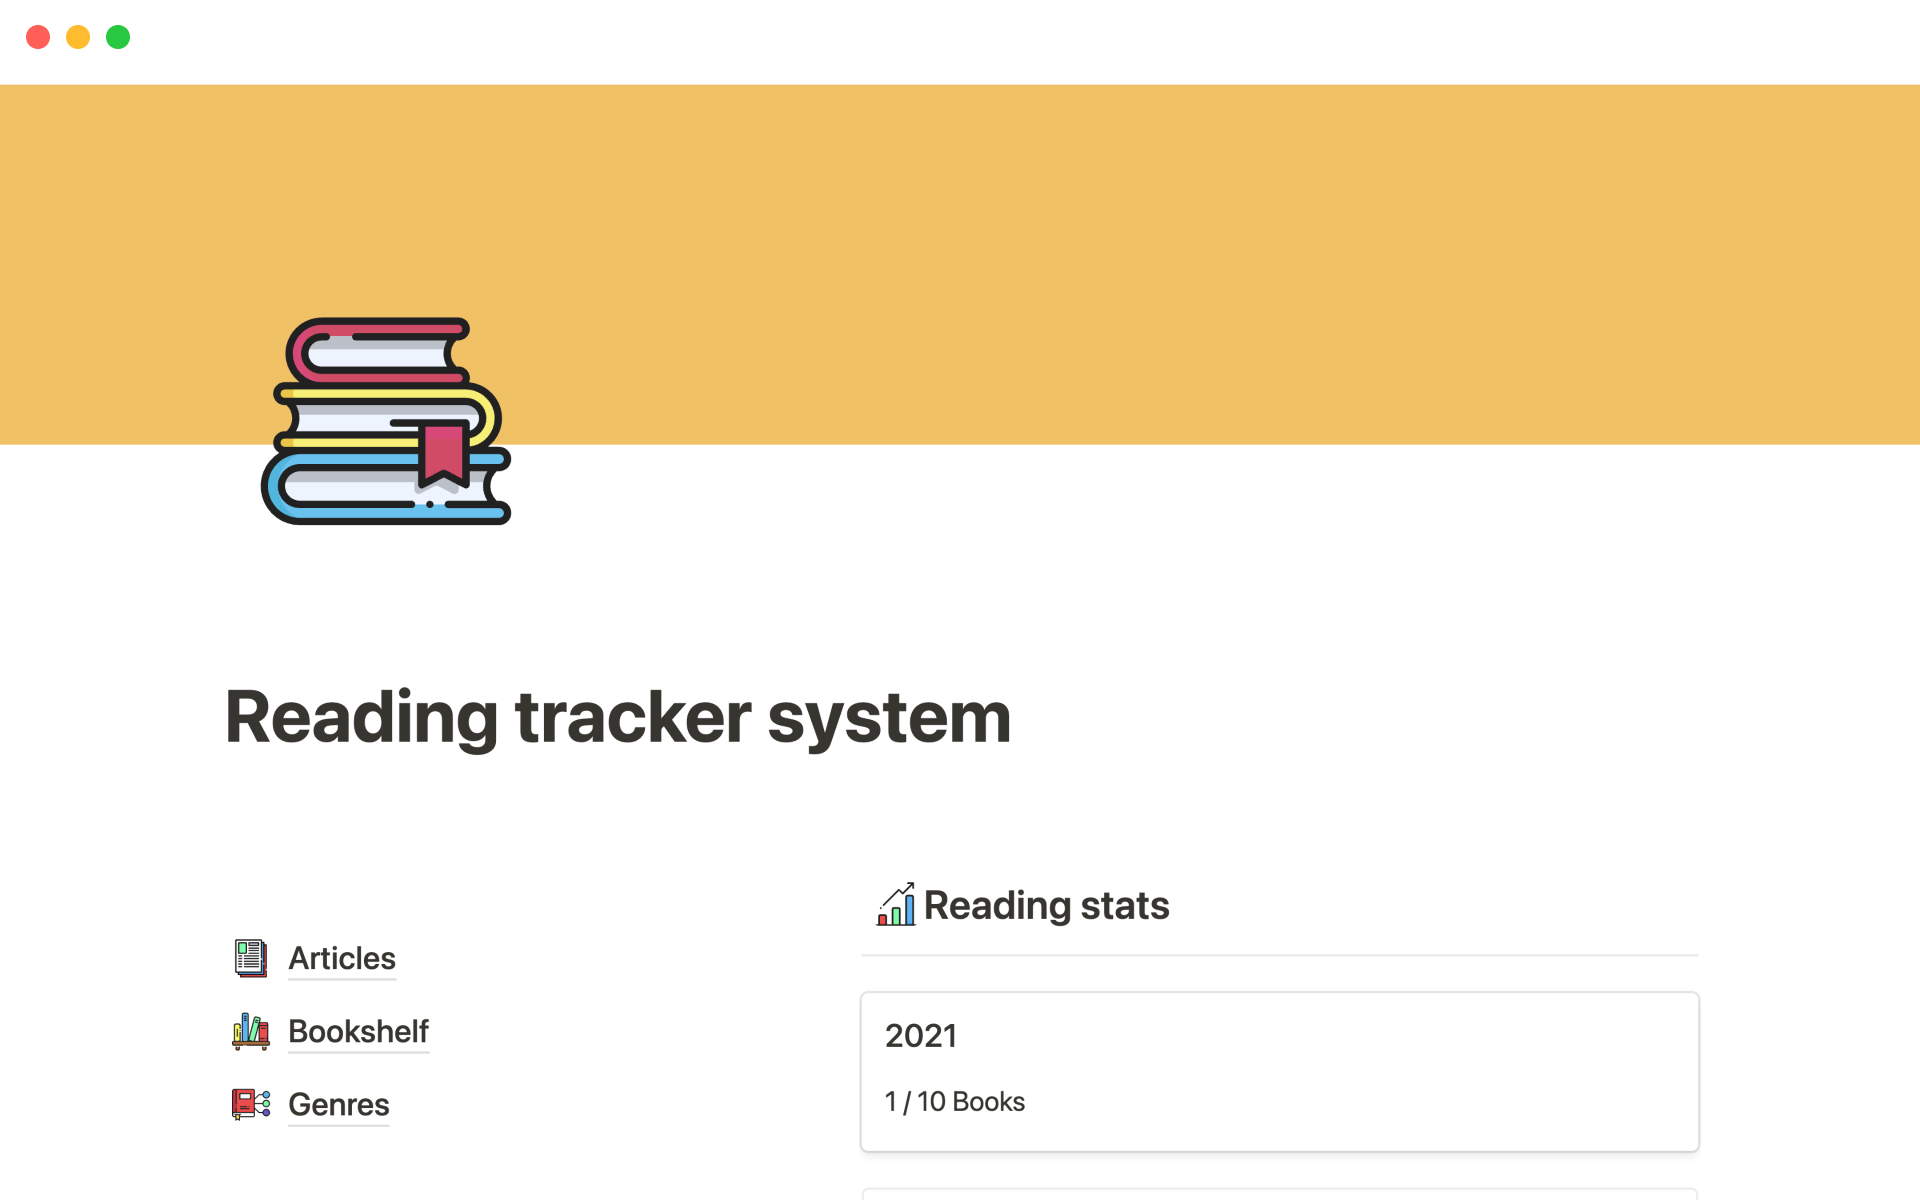 Aperçu du modèle de Reading tracker system